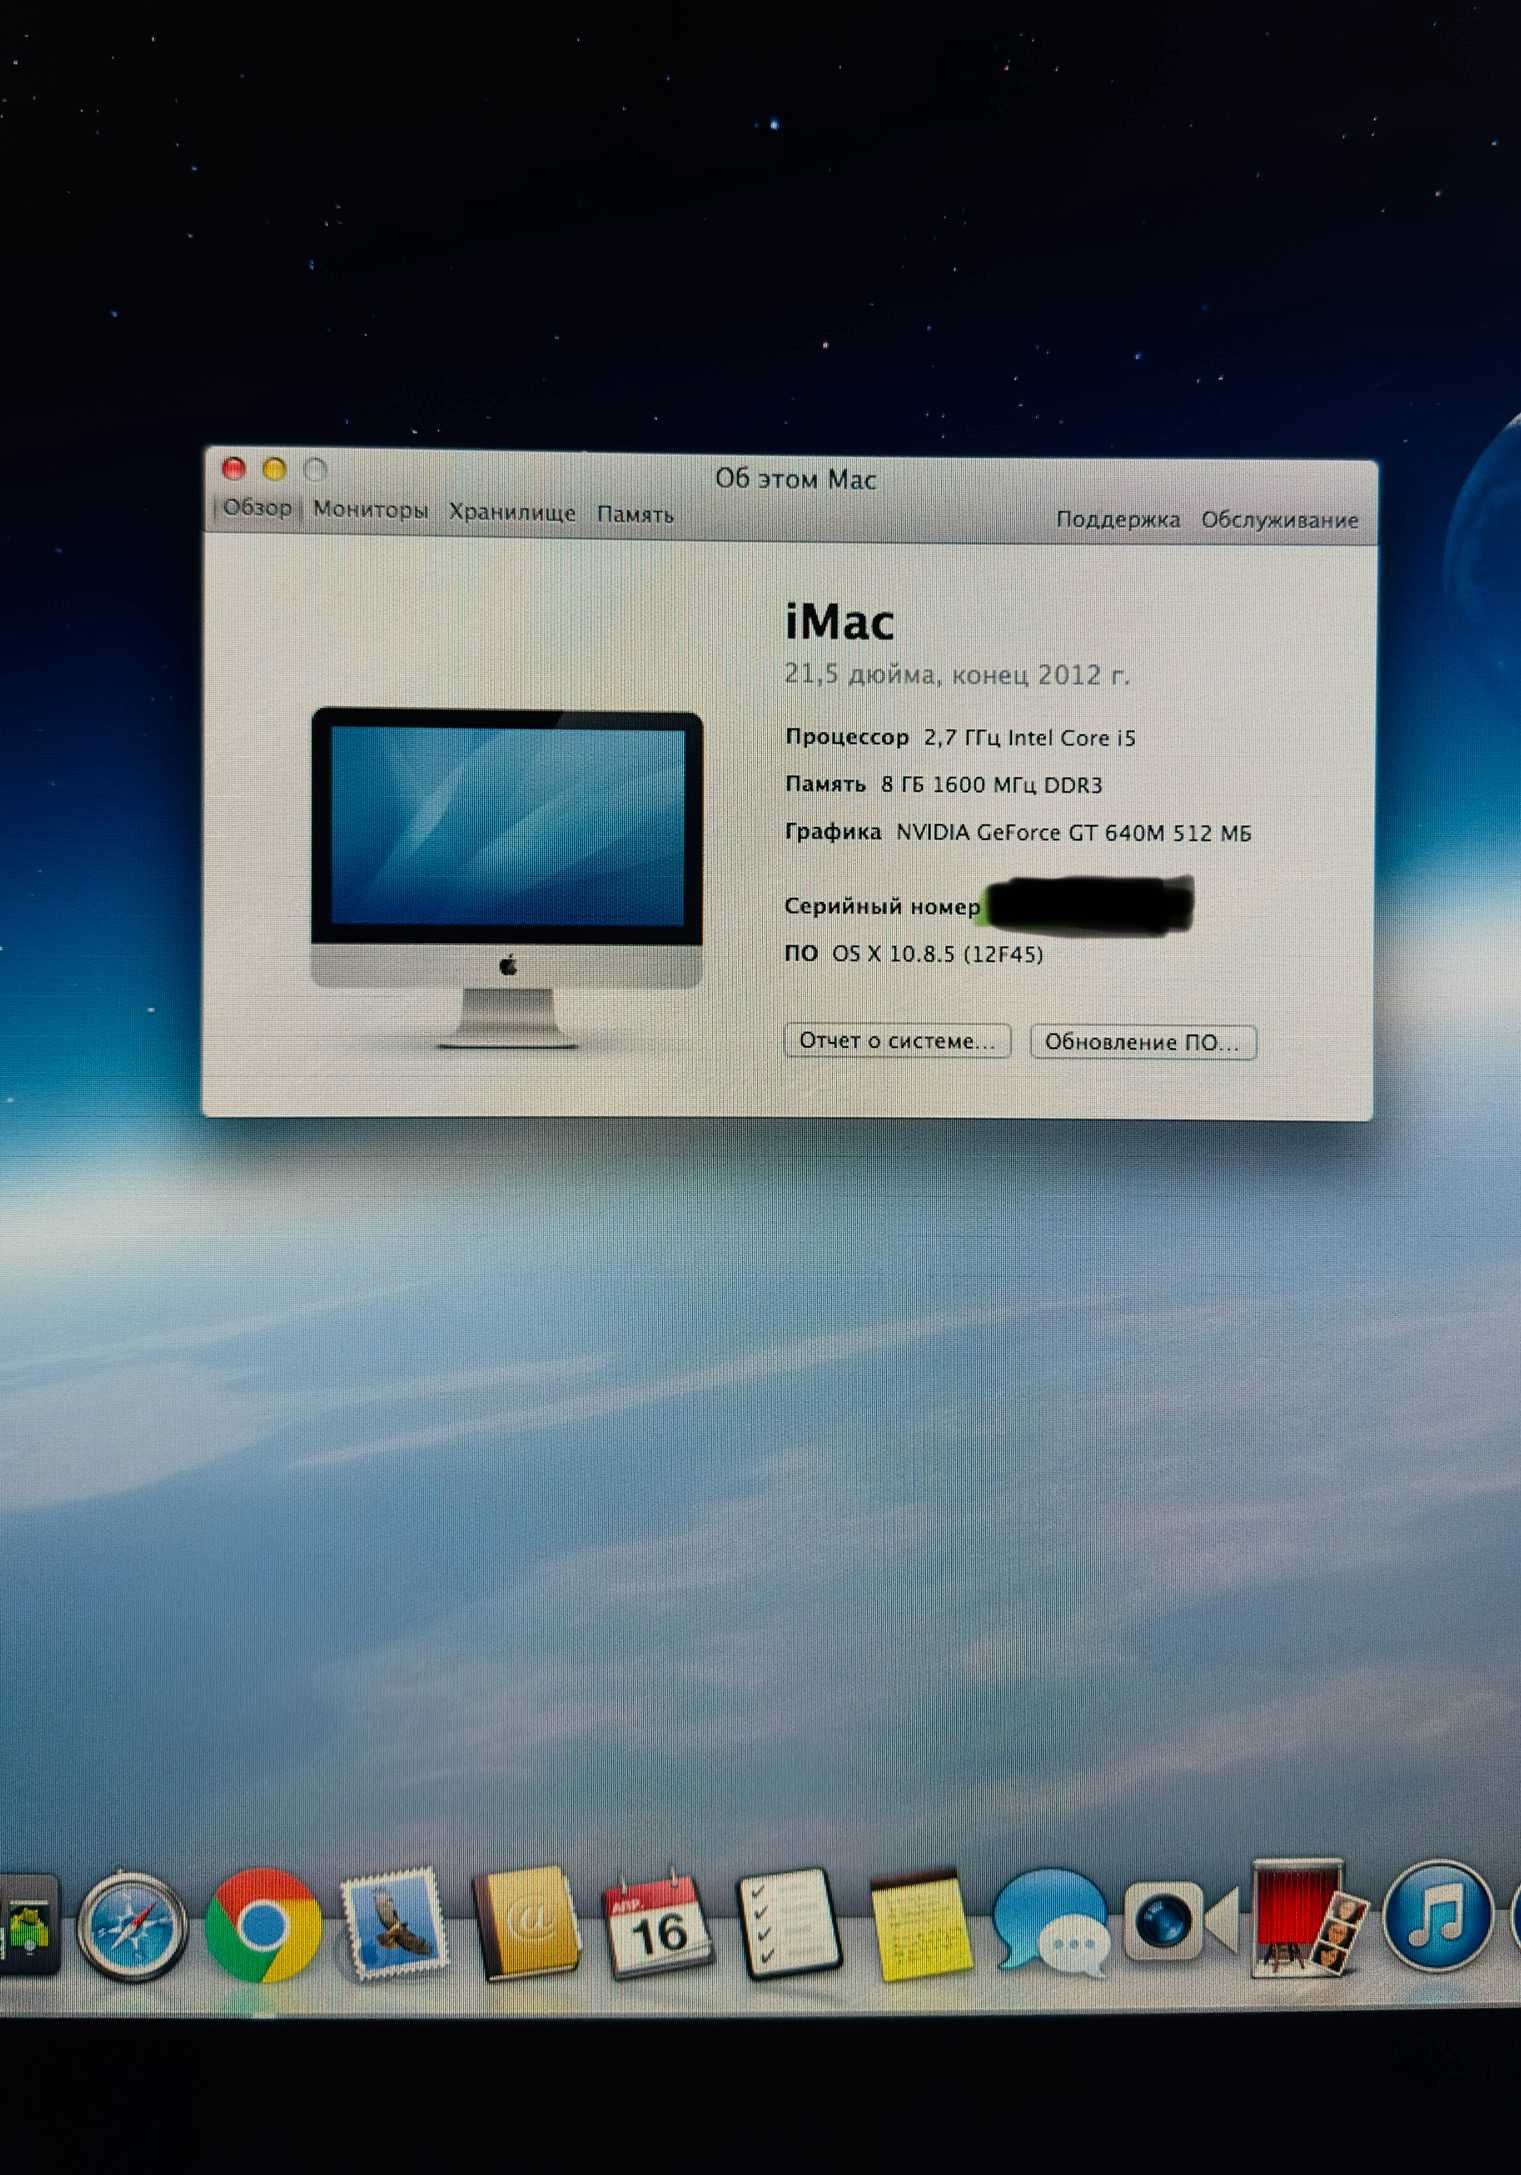 iMac 2012, iMac 2012